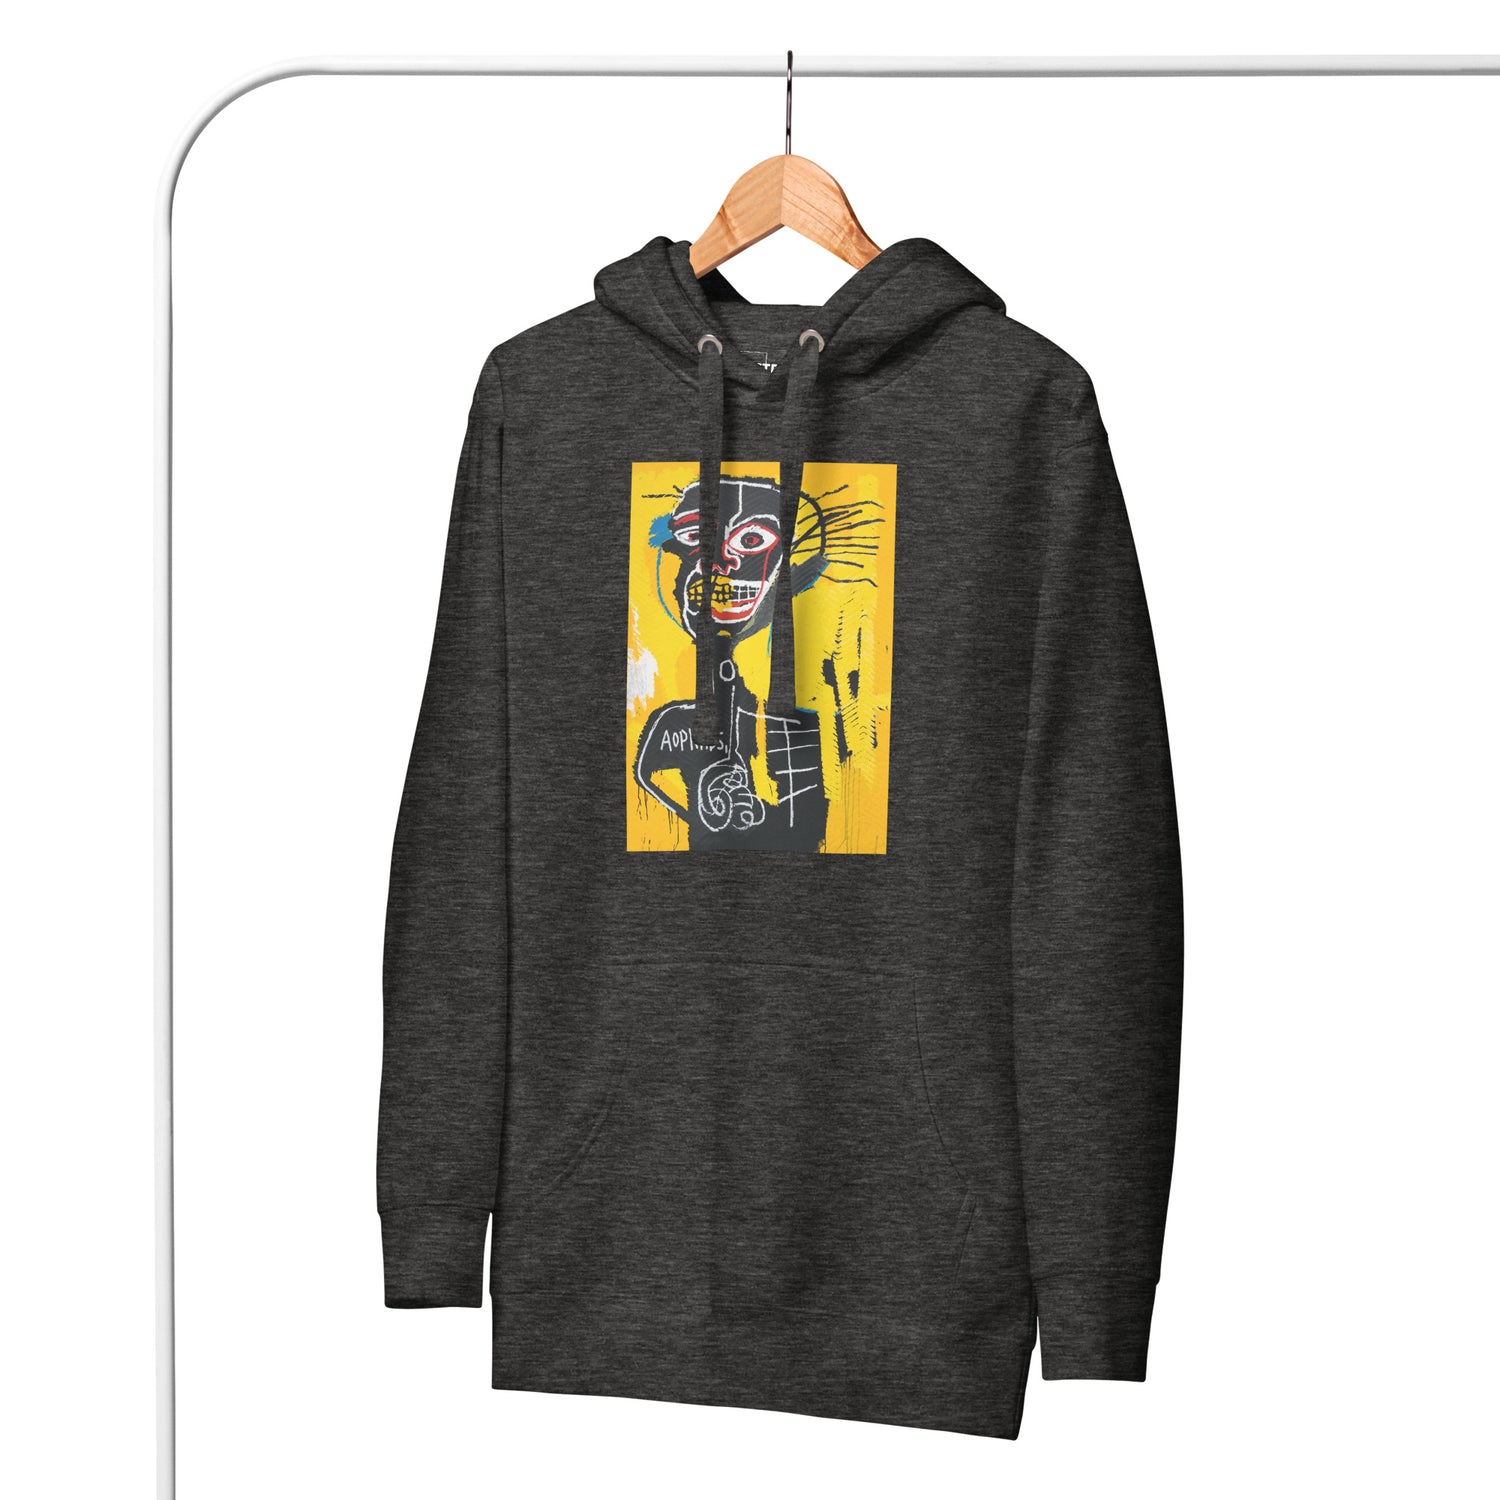 Jean-Michel Basquiat "Cabeza" Artwork Printed Premium Streetwear Sweatshirt Hoodie Charcoal Grey